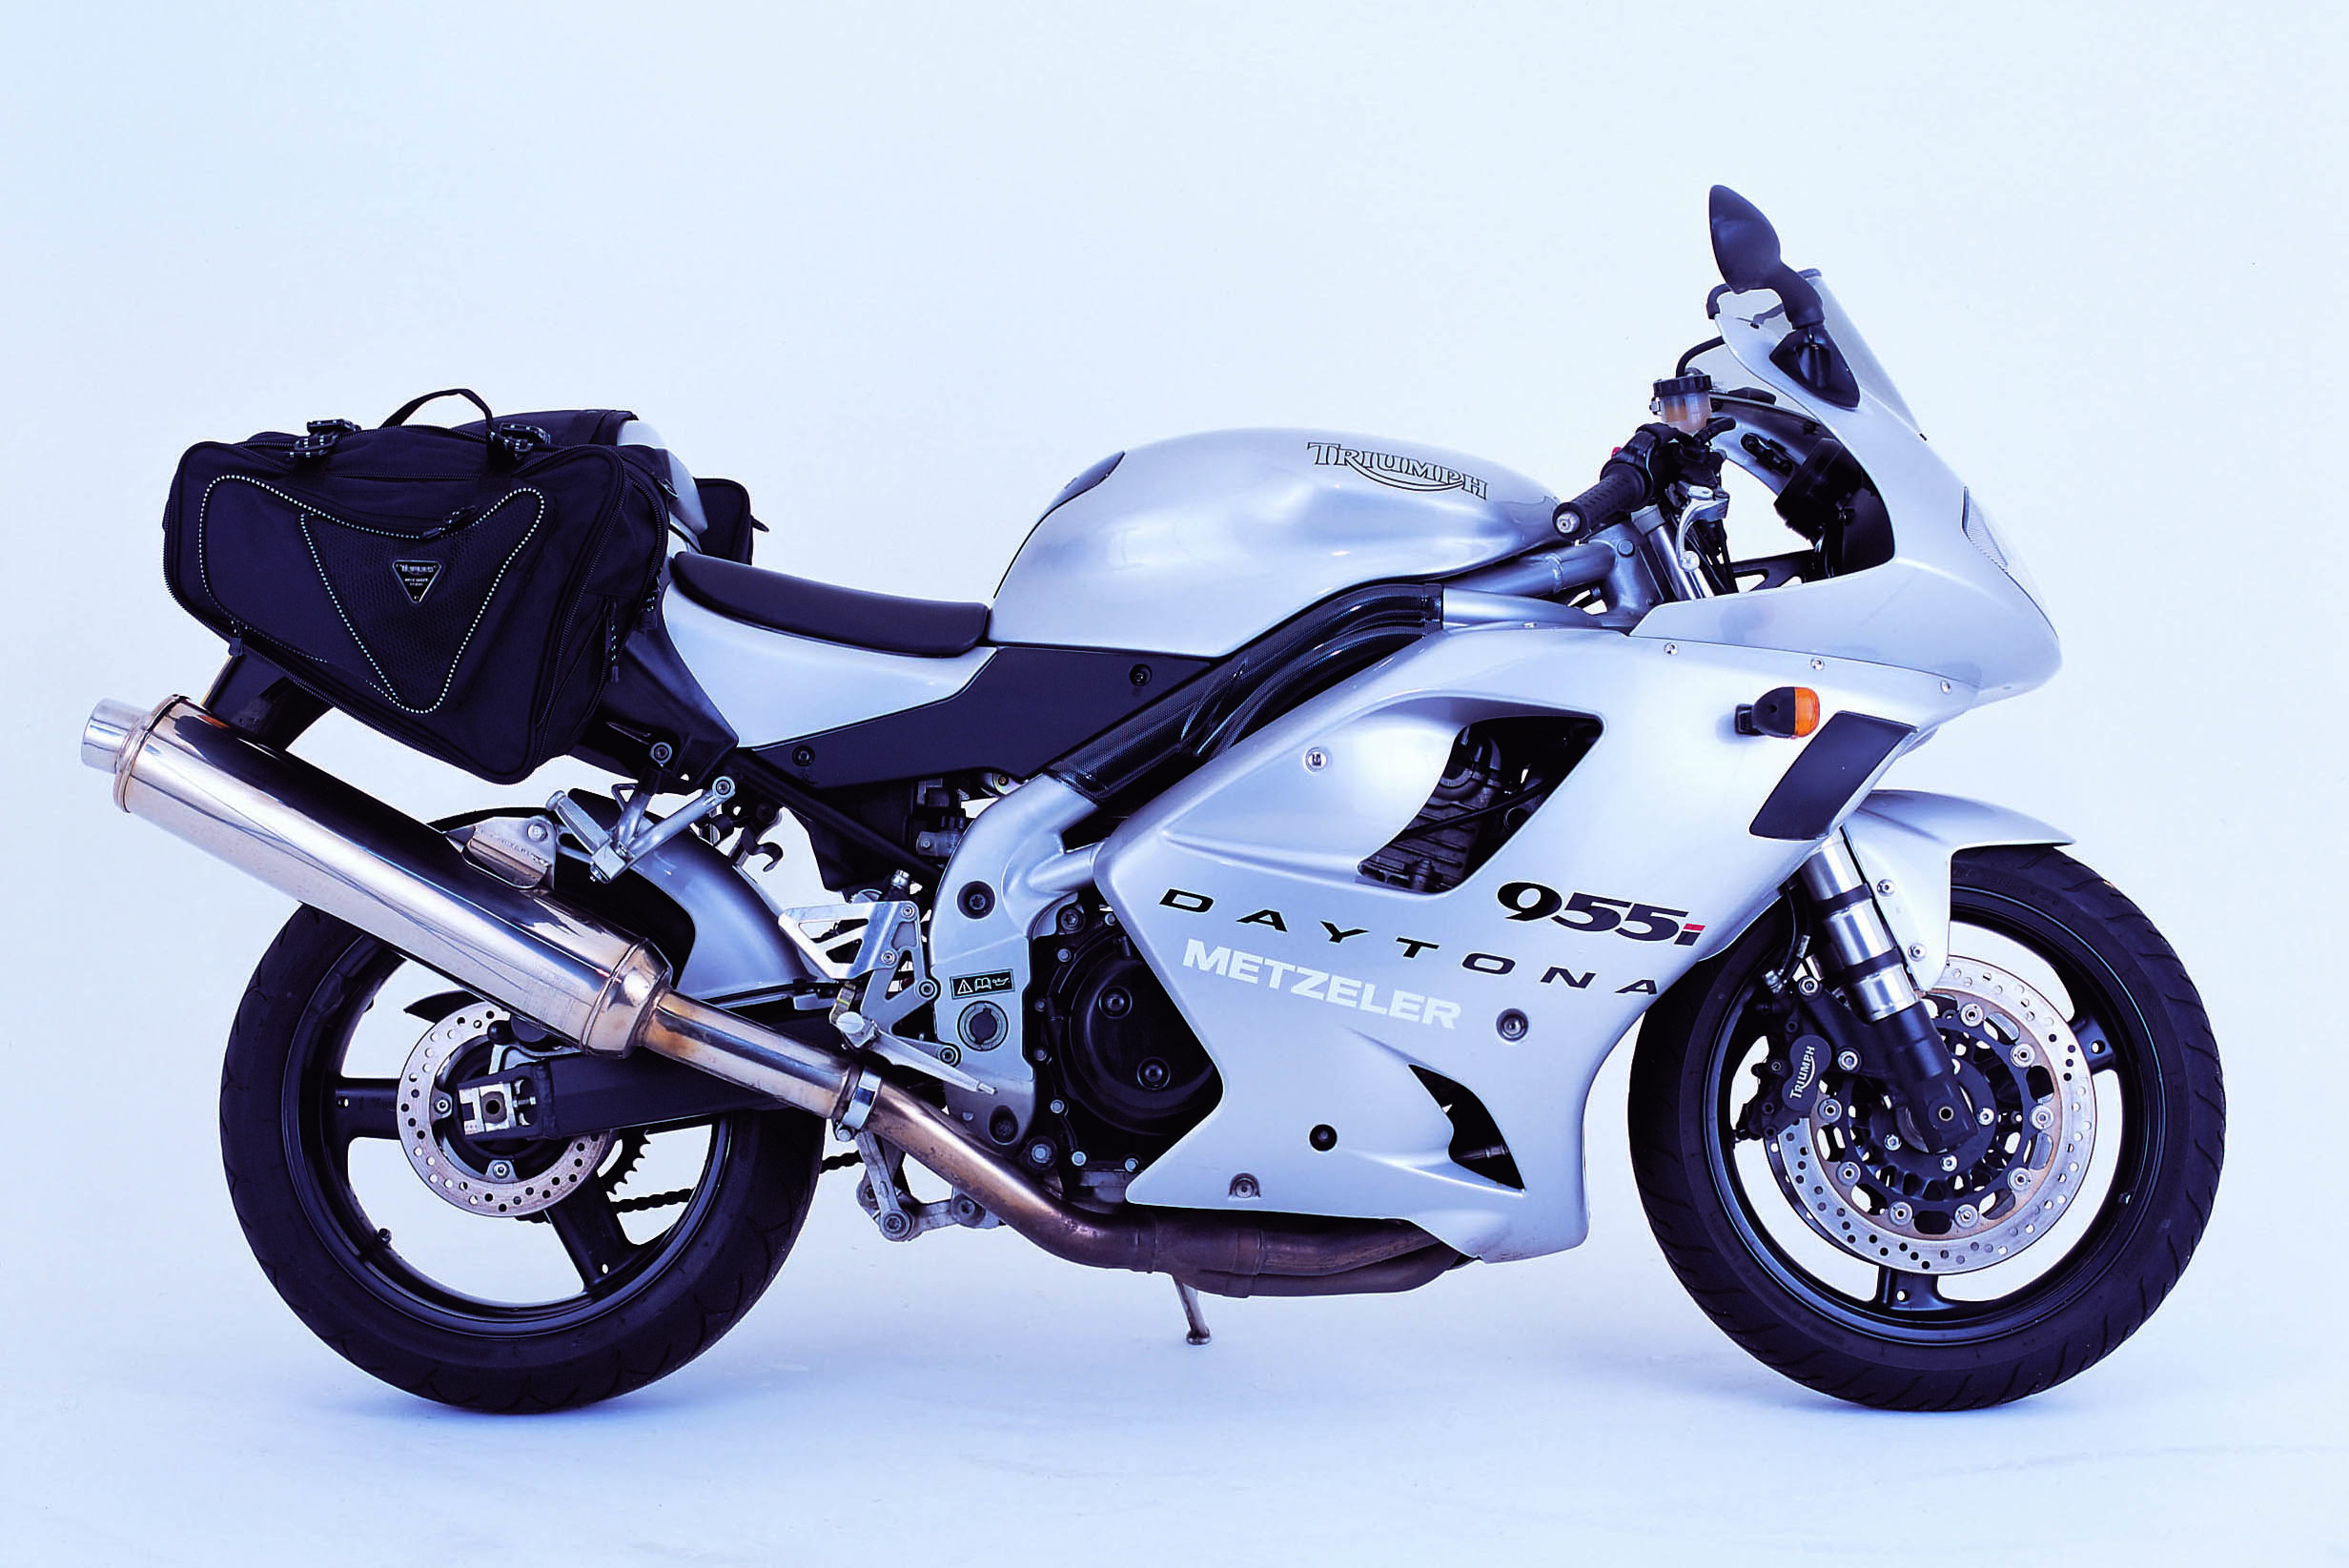 2002 triumph daytona 955i centennial edition with turbo – iconic motorbike auctions